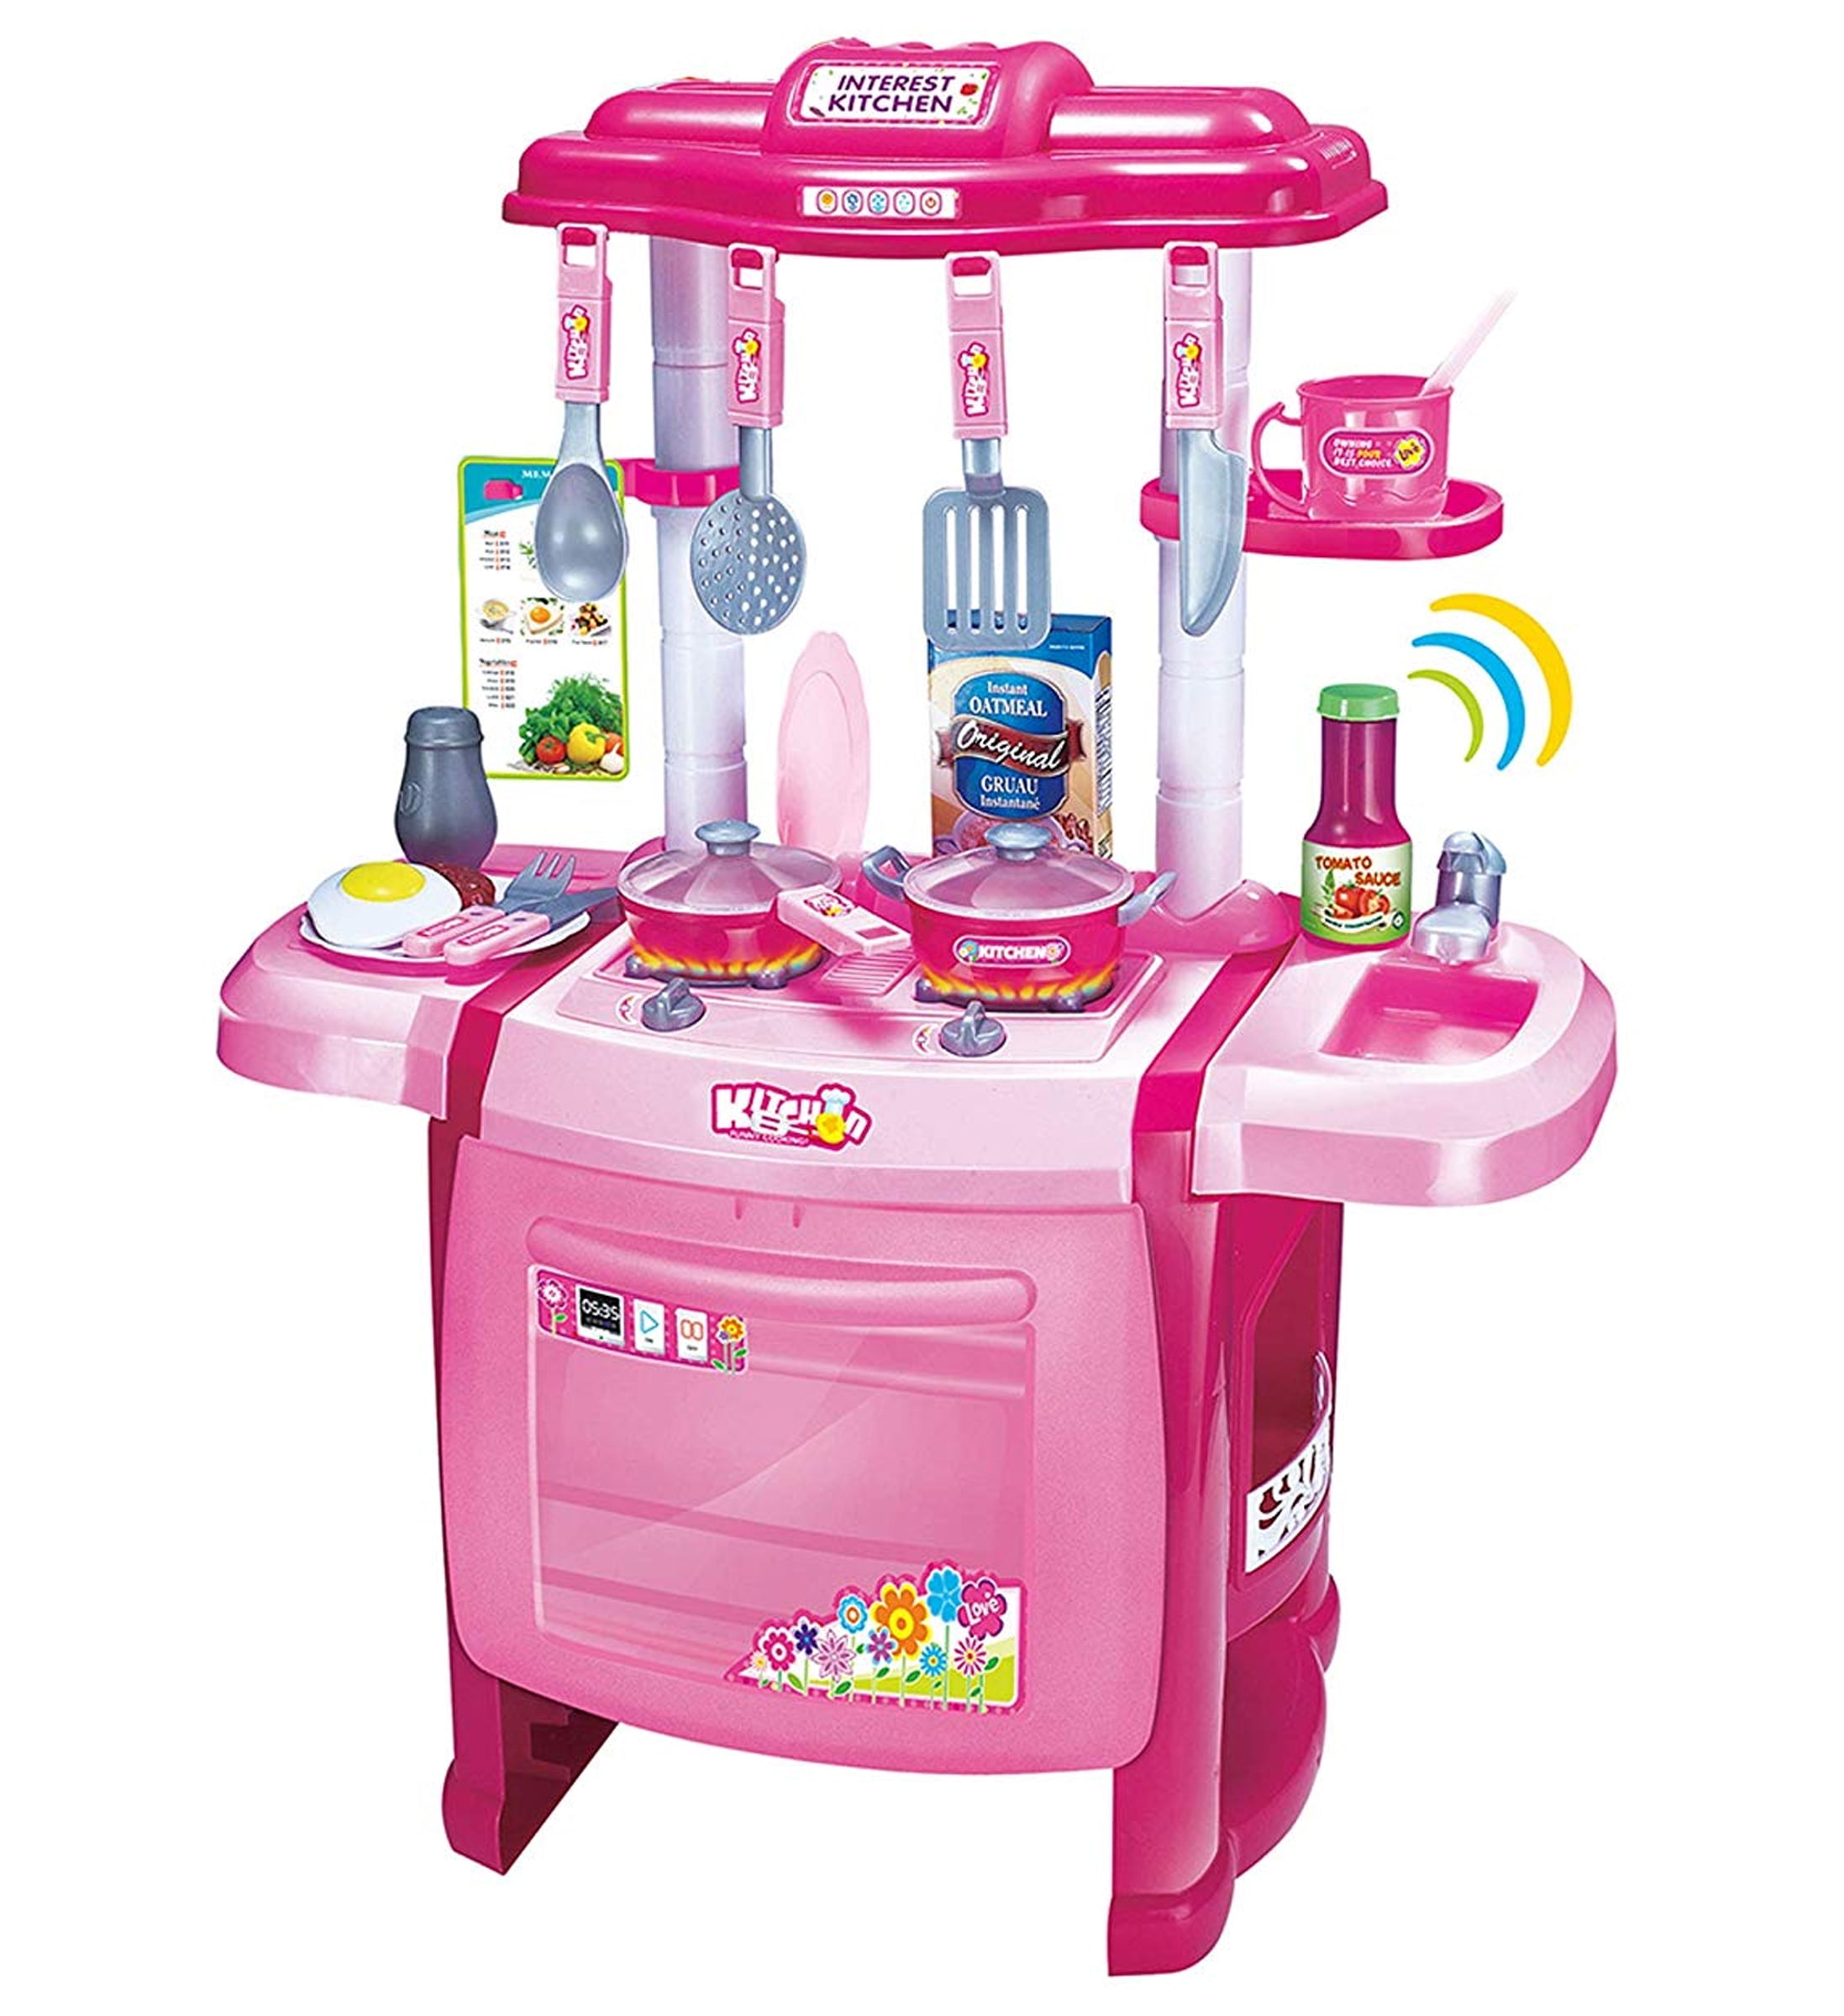 Кухня со звуком. Плита Игруша luxurious Mini Kitchen Set i8336abc. Детская кухня Zhorya WD-b18. Kitchen Dream кухня детская 3568 Toys. Набор кухни для девочек.